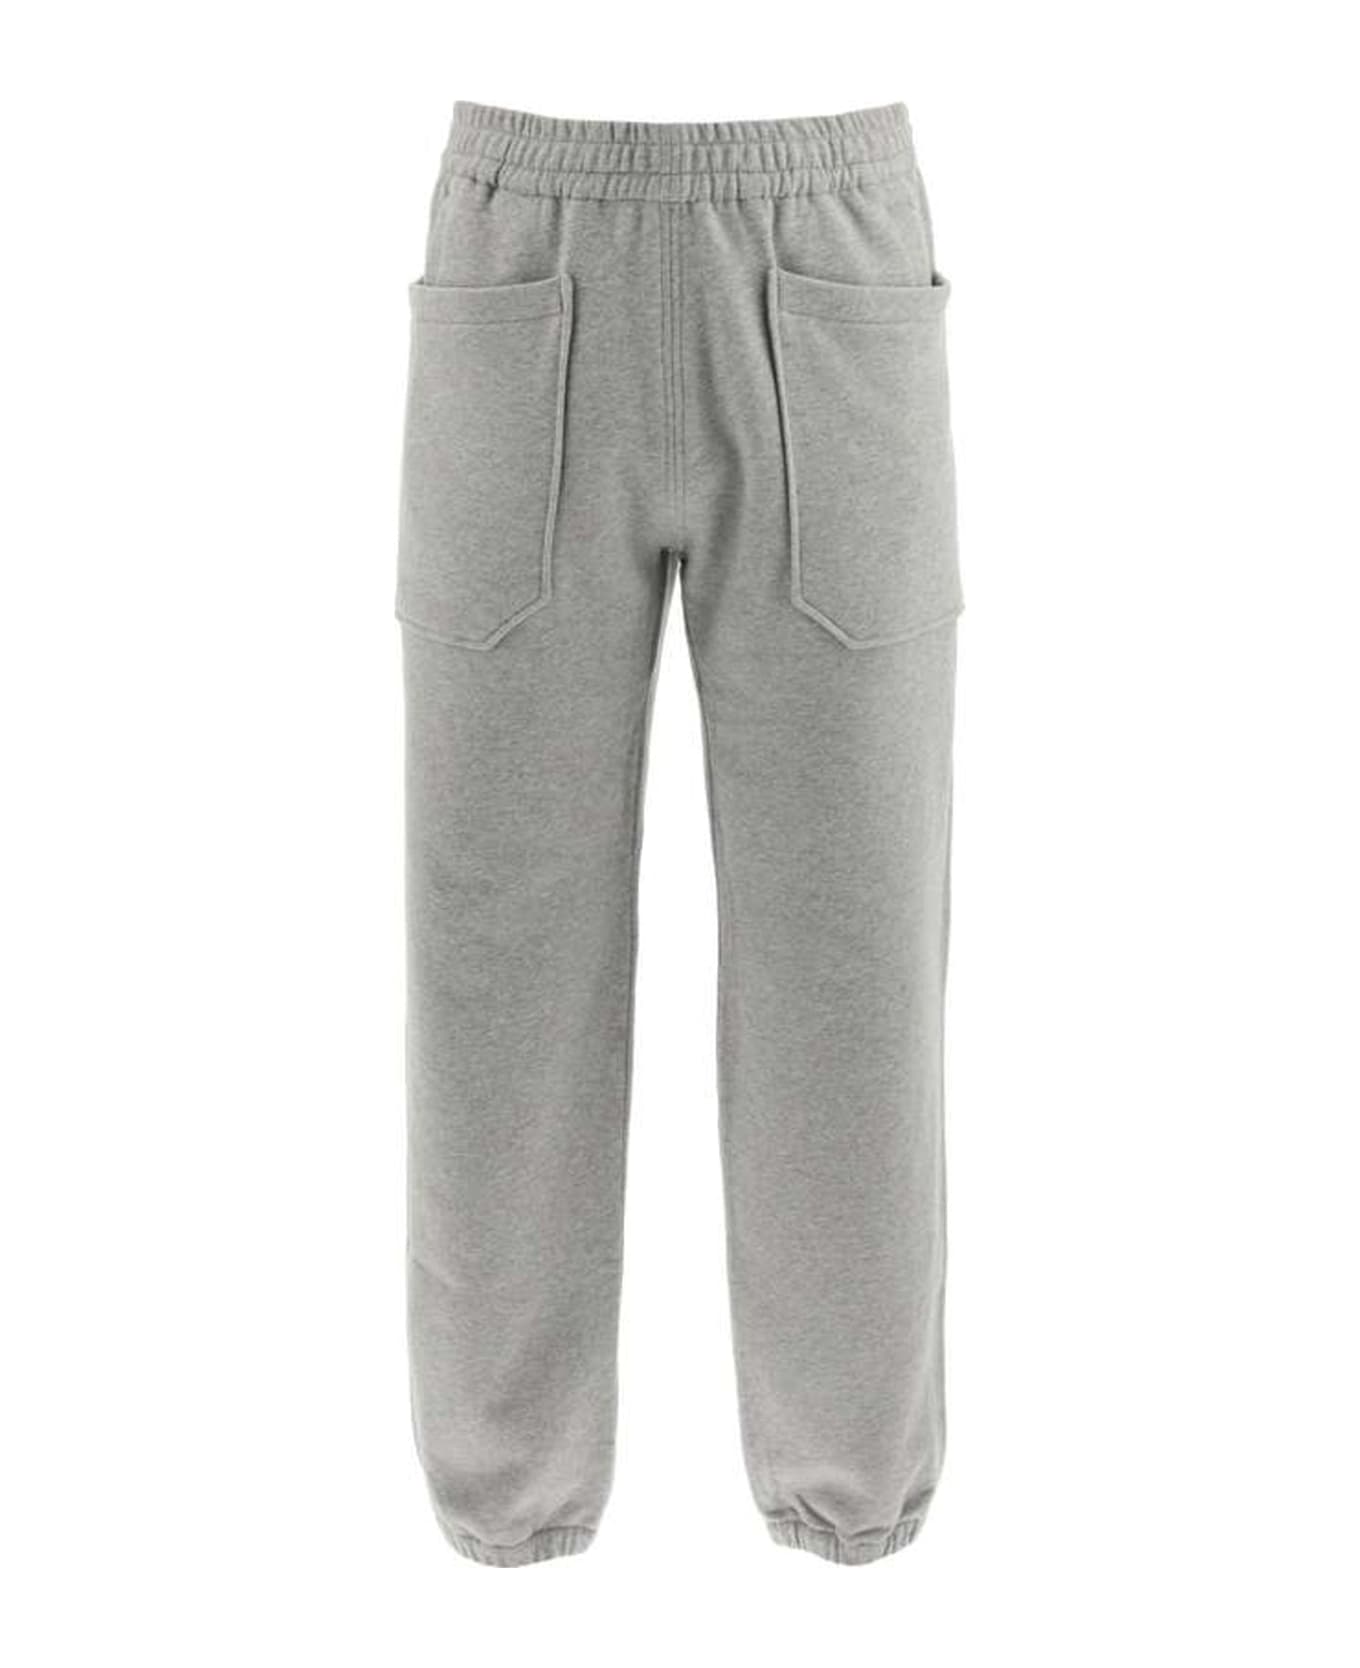 Zegna Cotton Sweatpants - Gray